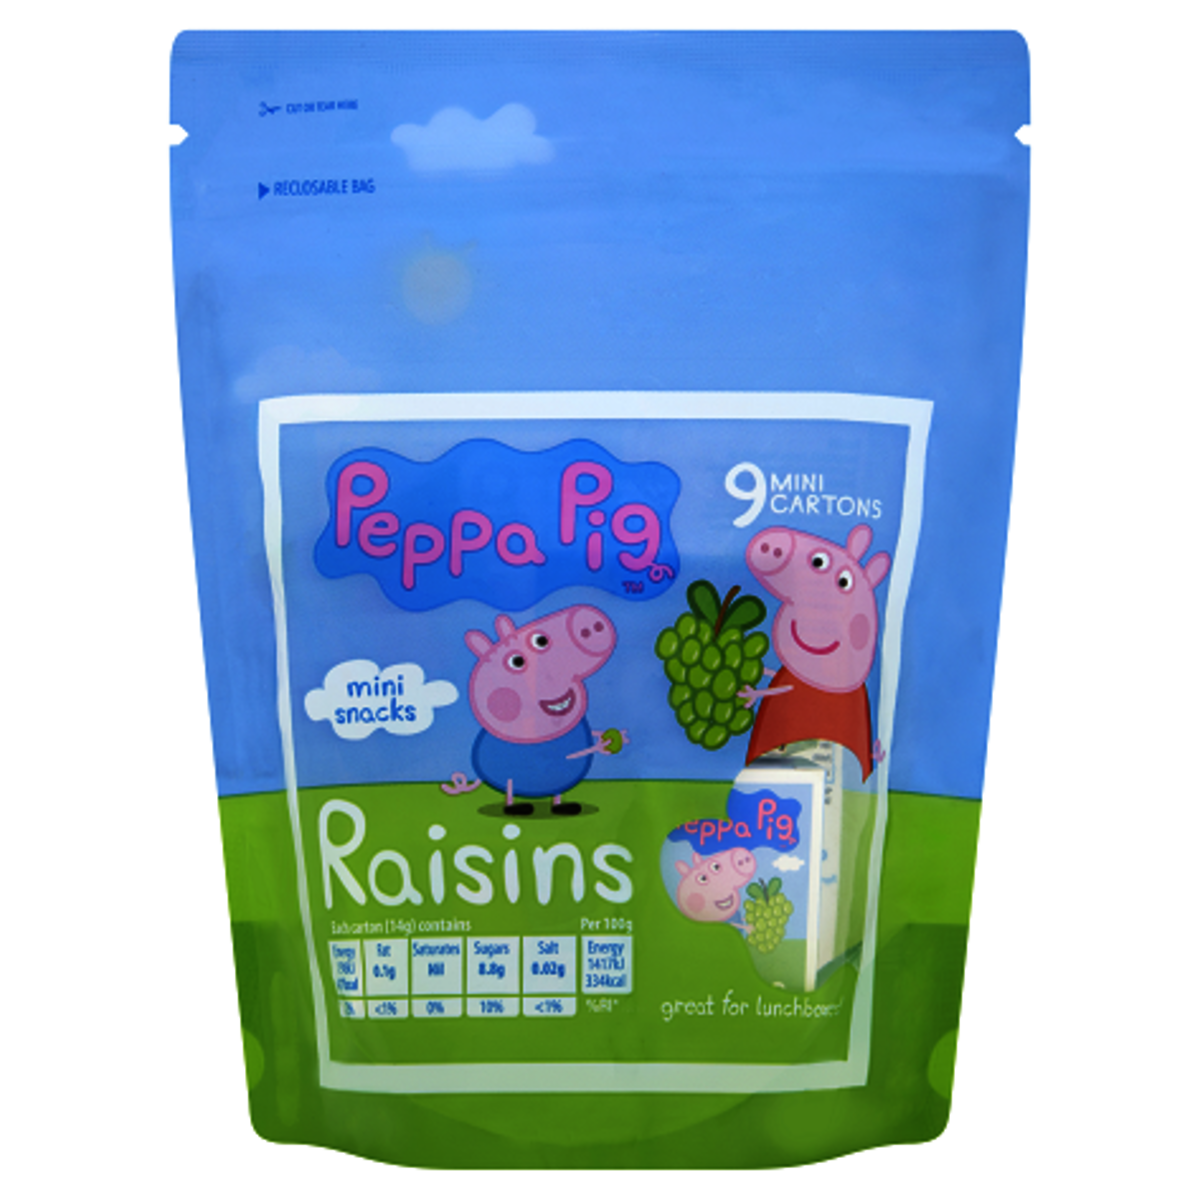 Raisins 9 x 14g mini packs | Best Before: 1 Jun 2025